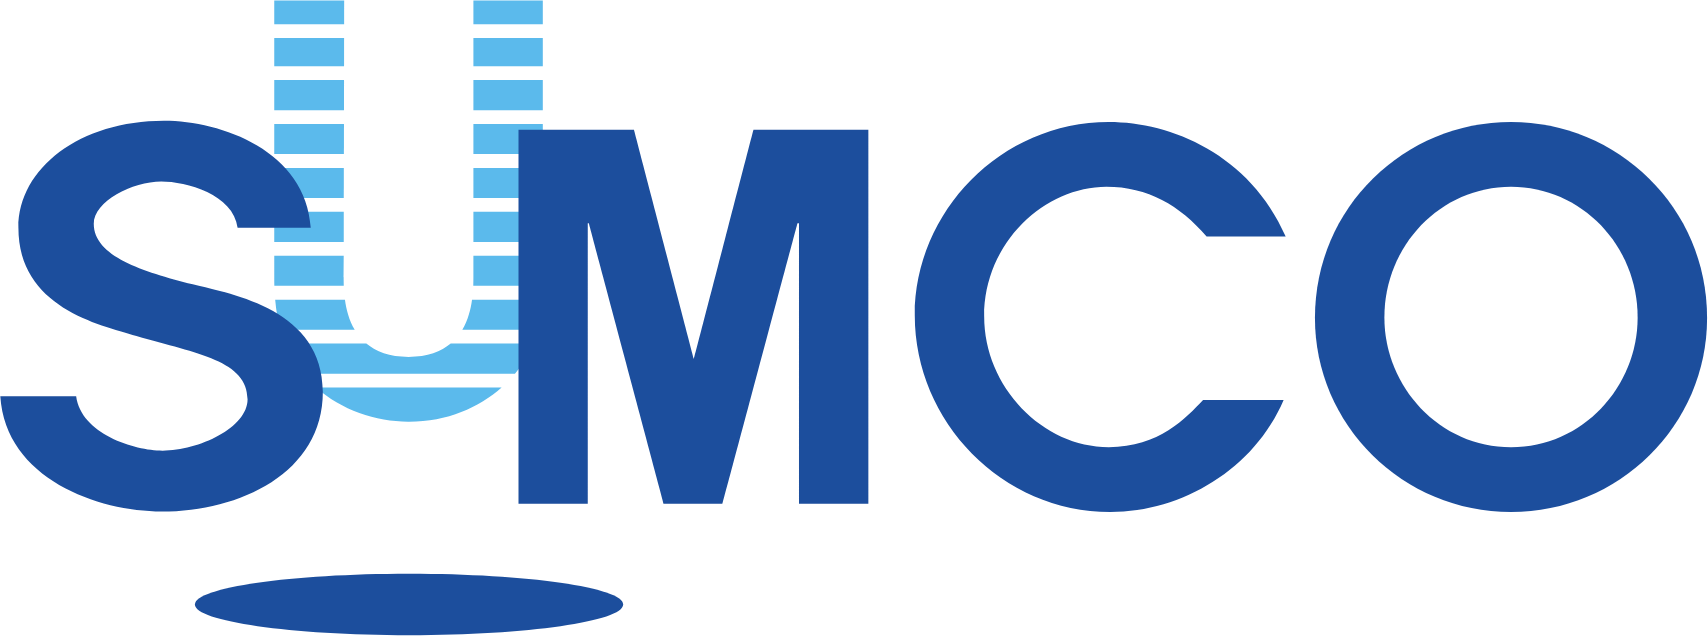 Formosa Sumco Technology logo large (transparent PNG)